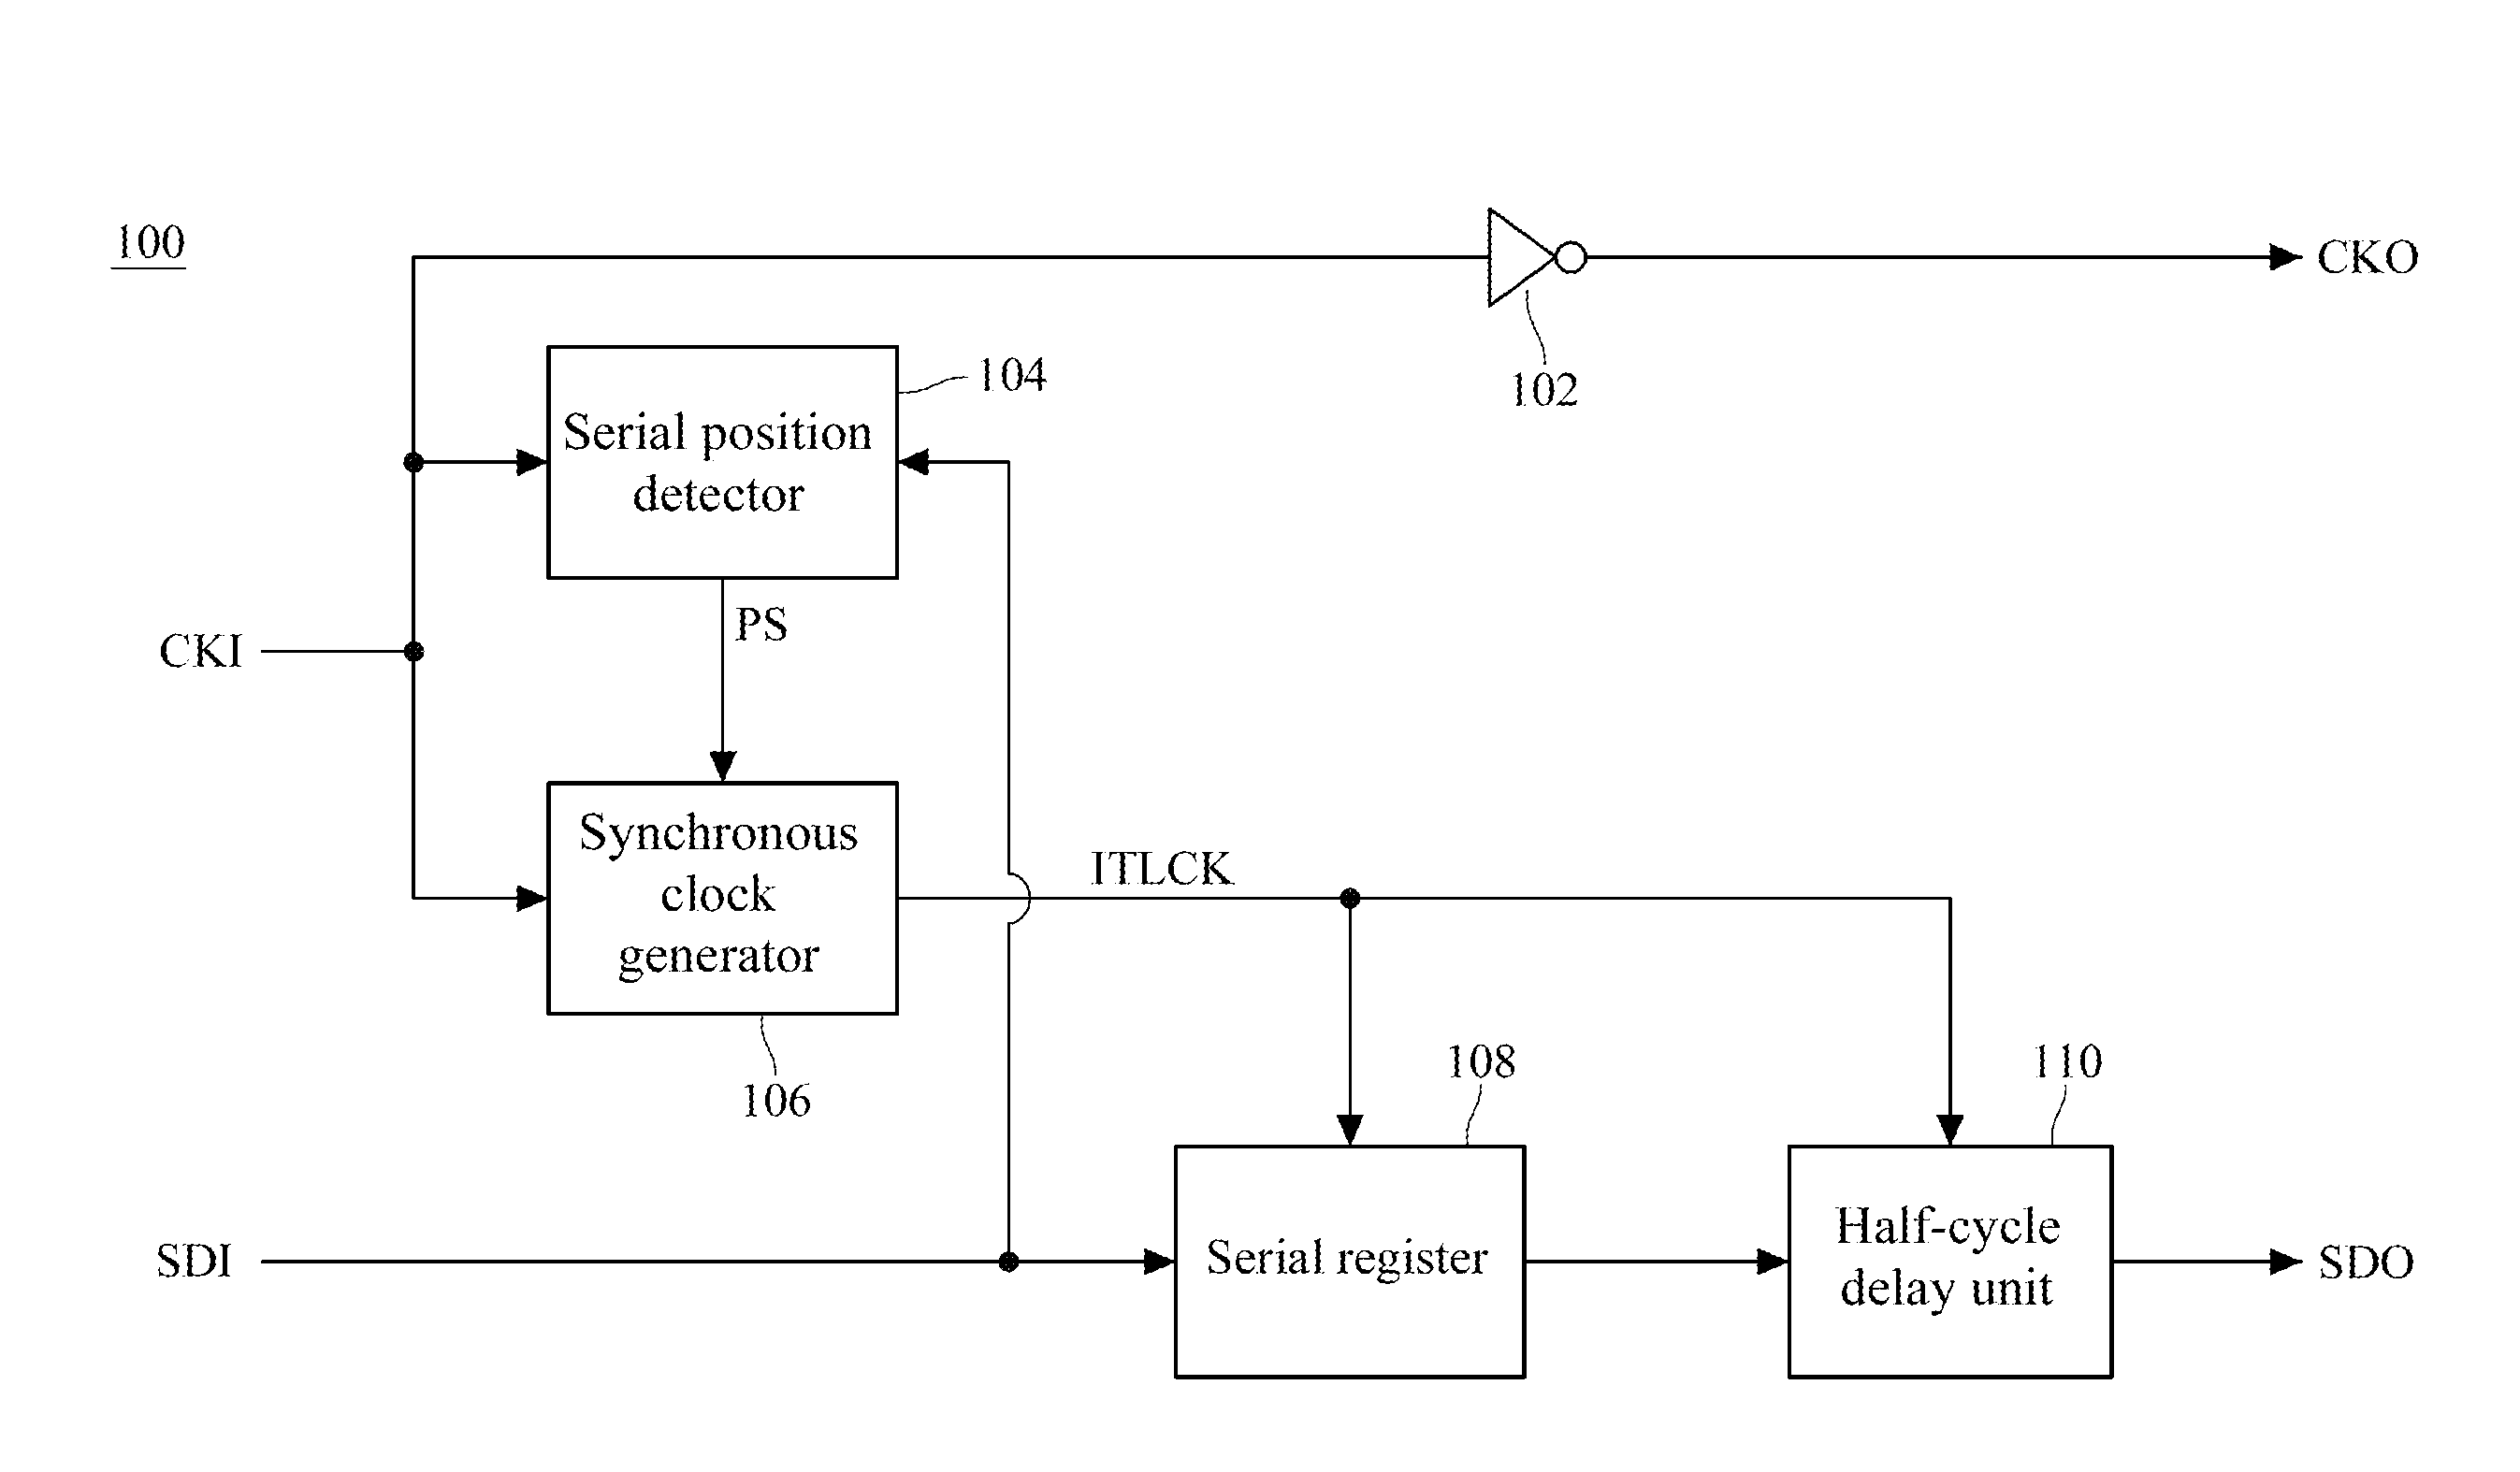 Serial controller and bi-directional serial controller